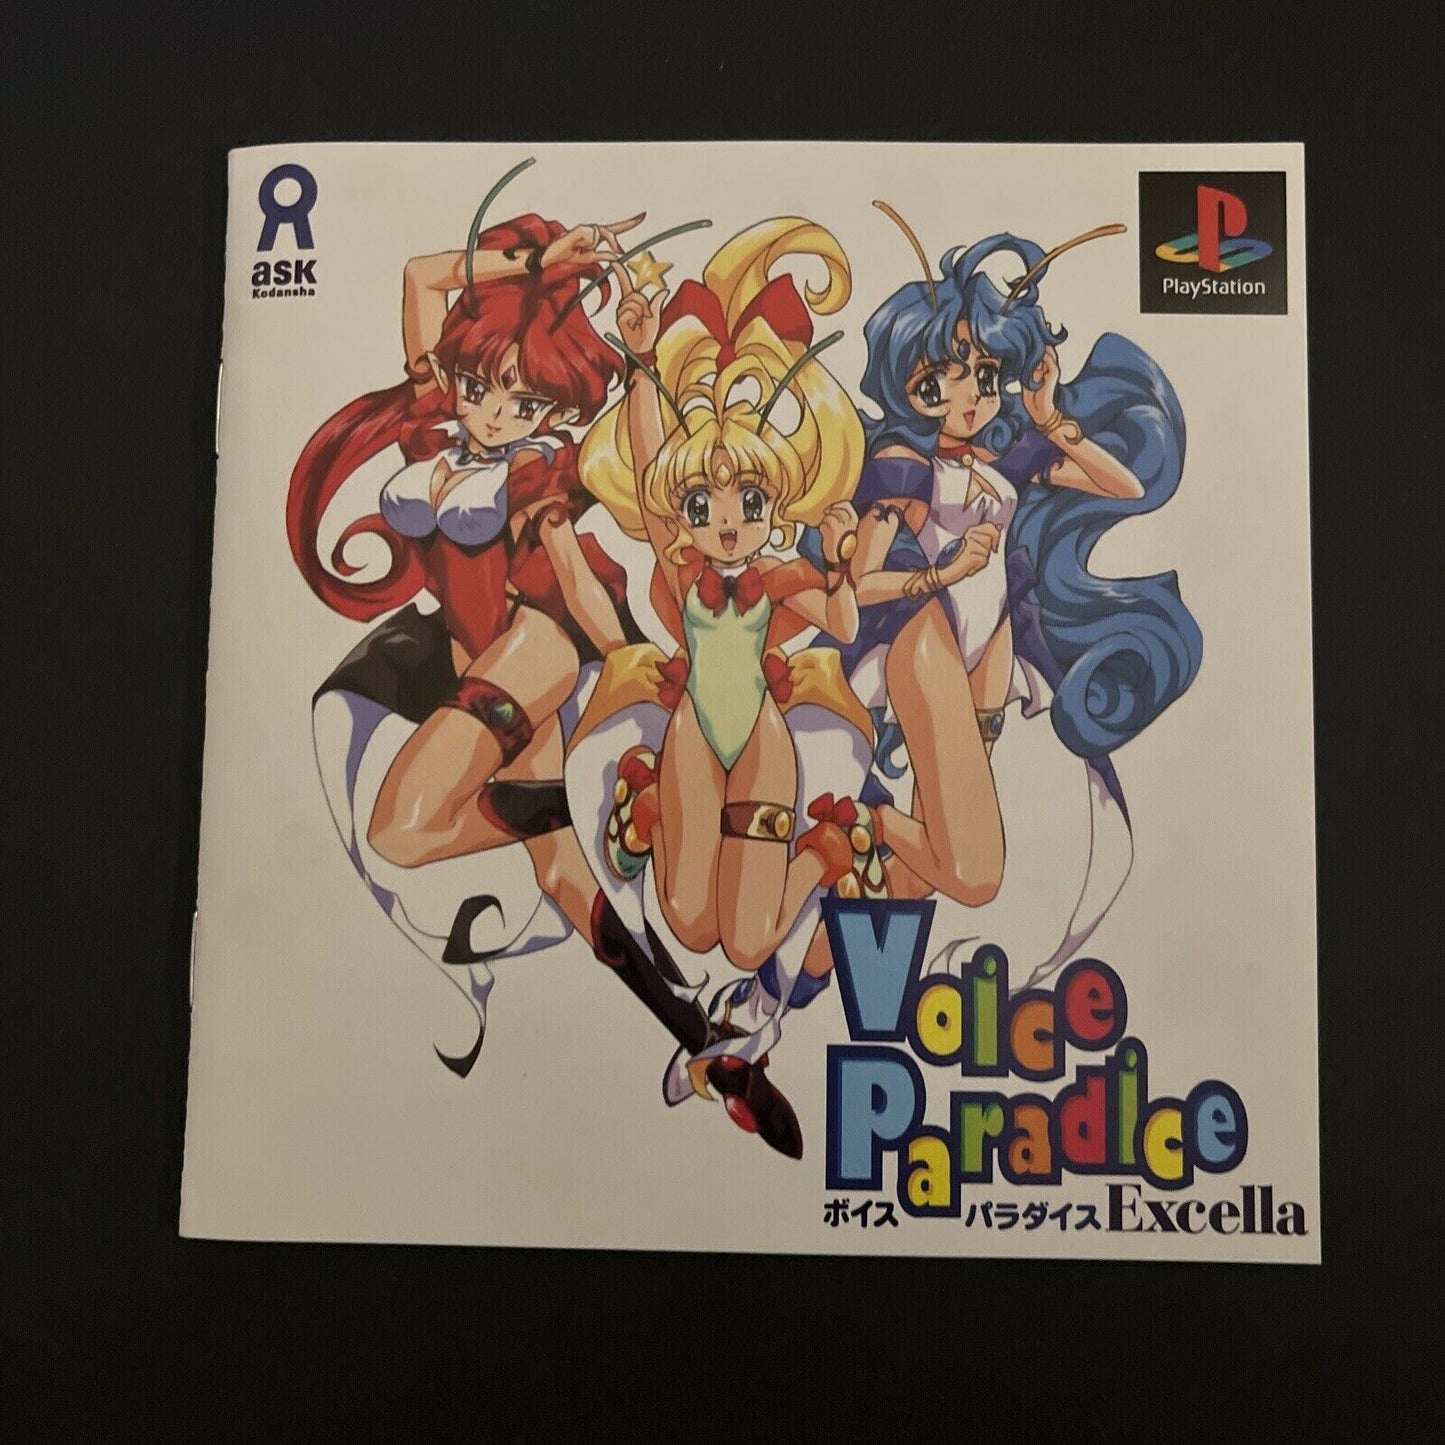 Voice Paradice Excella - PlayStation PS1 NTSC-J Japan Game